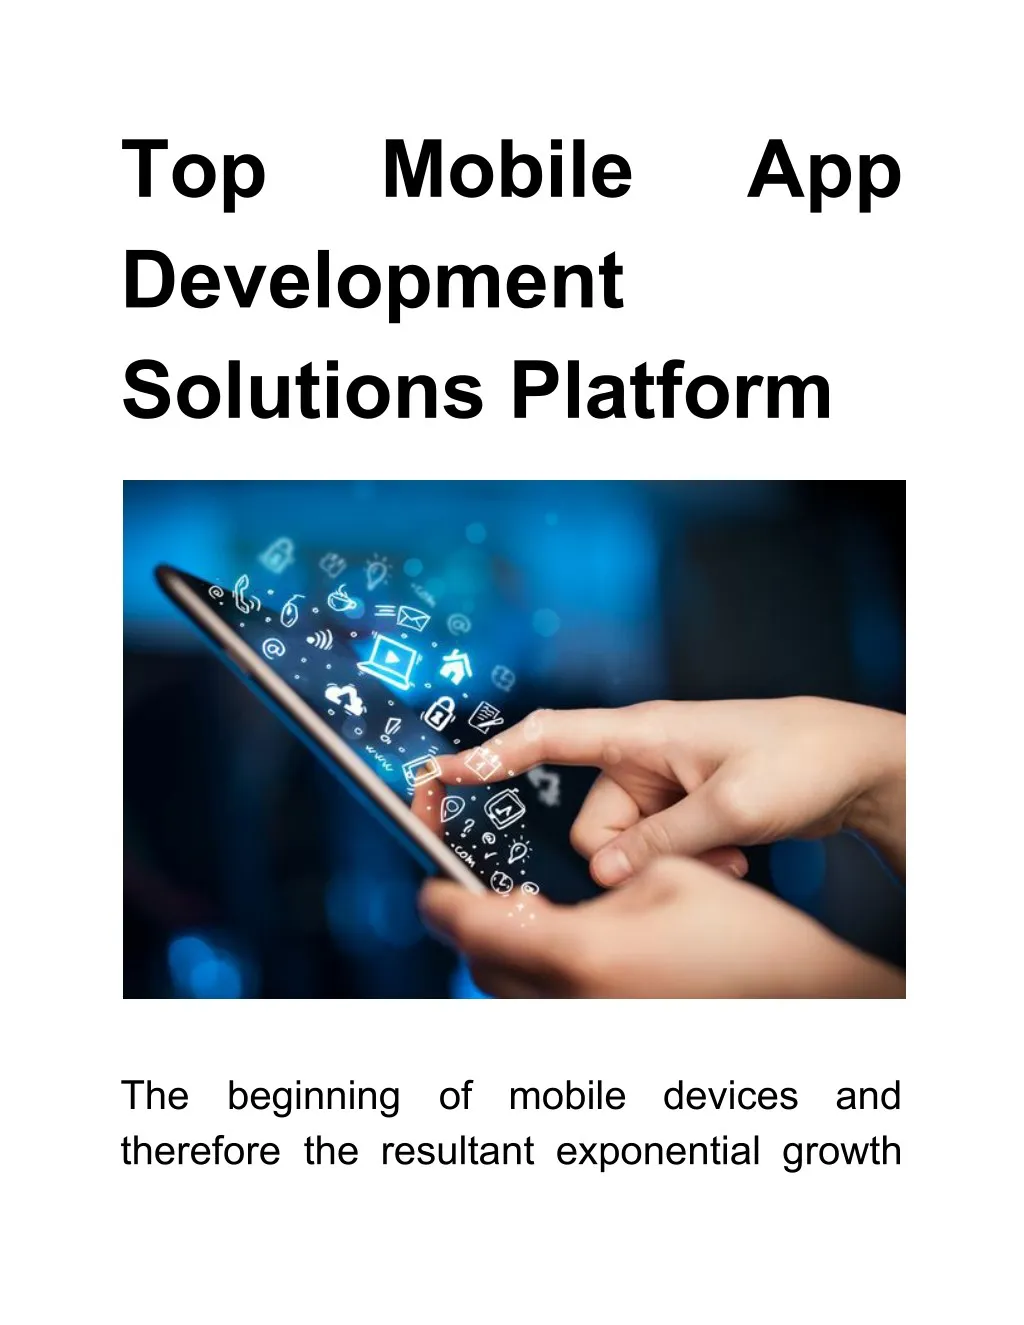 top development solutions platform